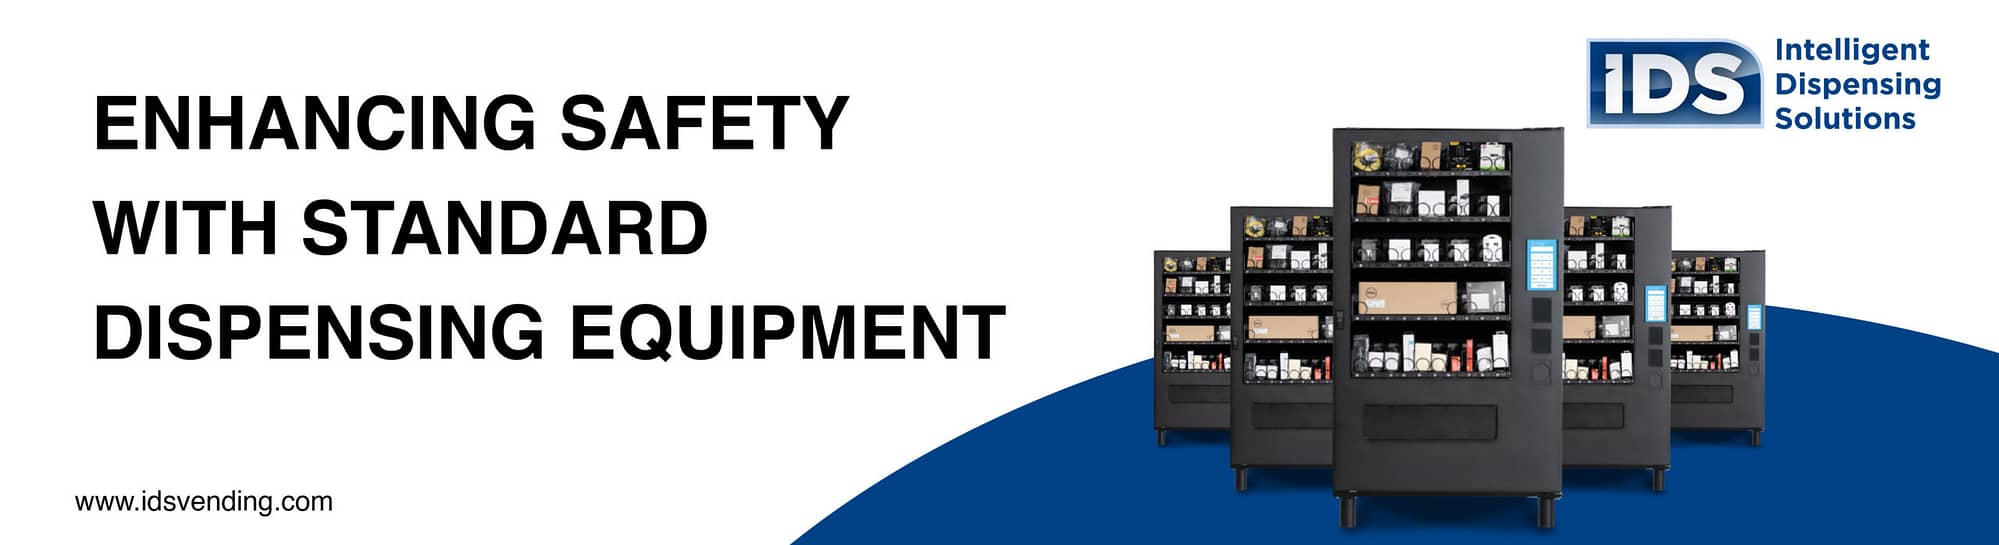 Idsvending.com - Enhancing Safety With Standard Dispensing Equipment